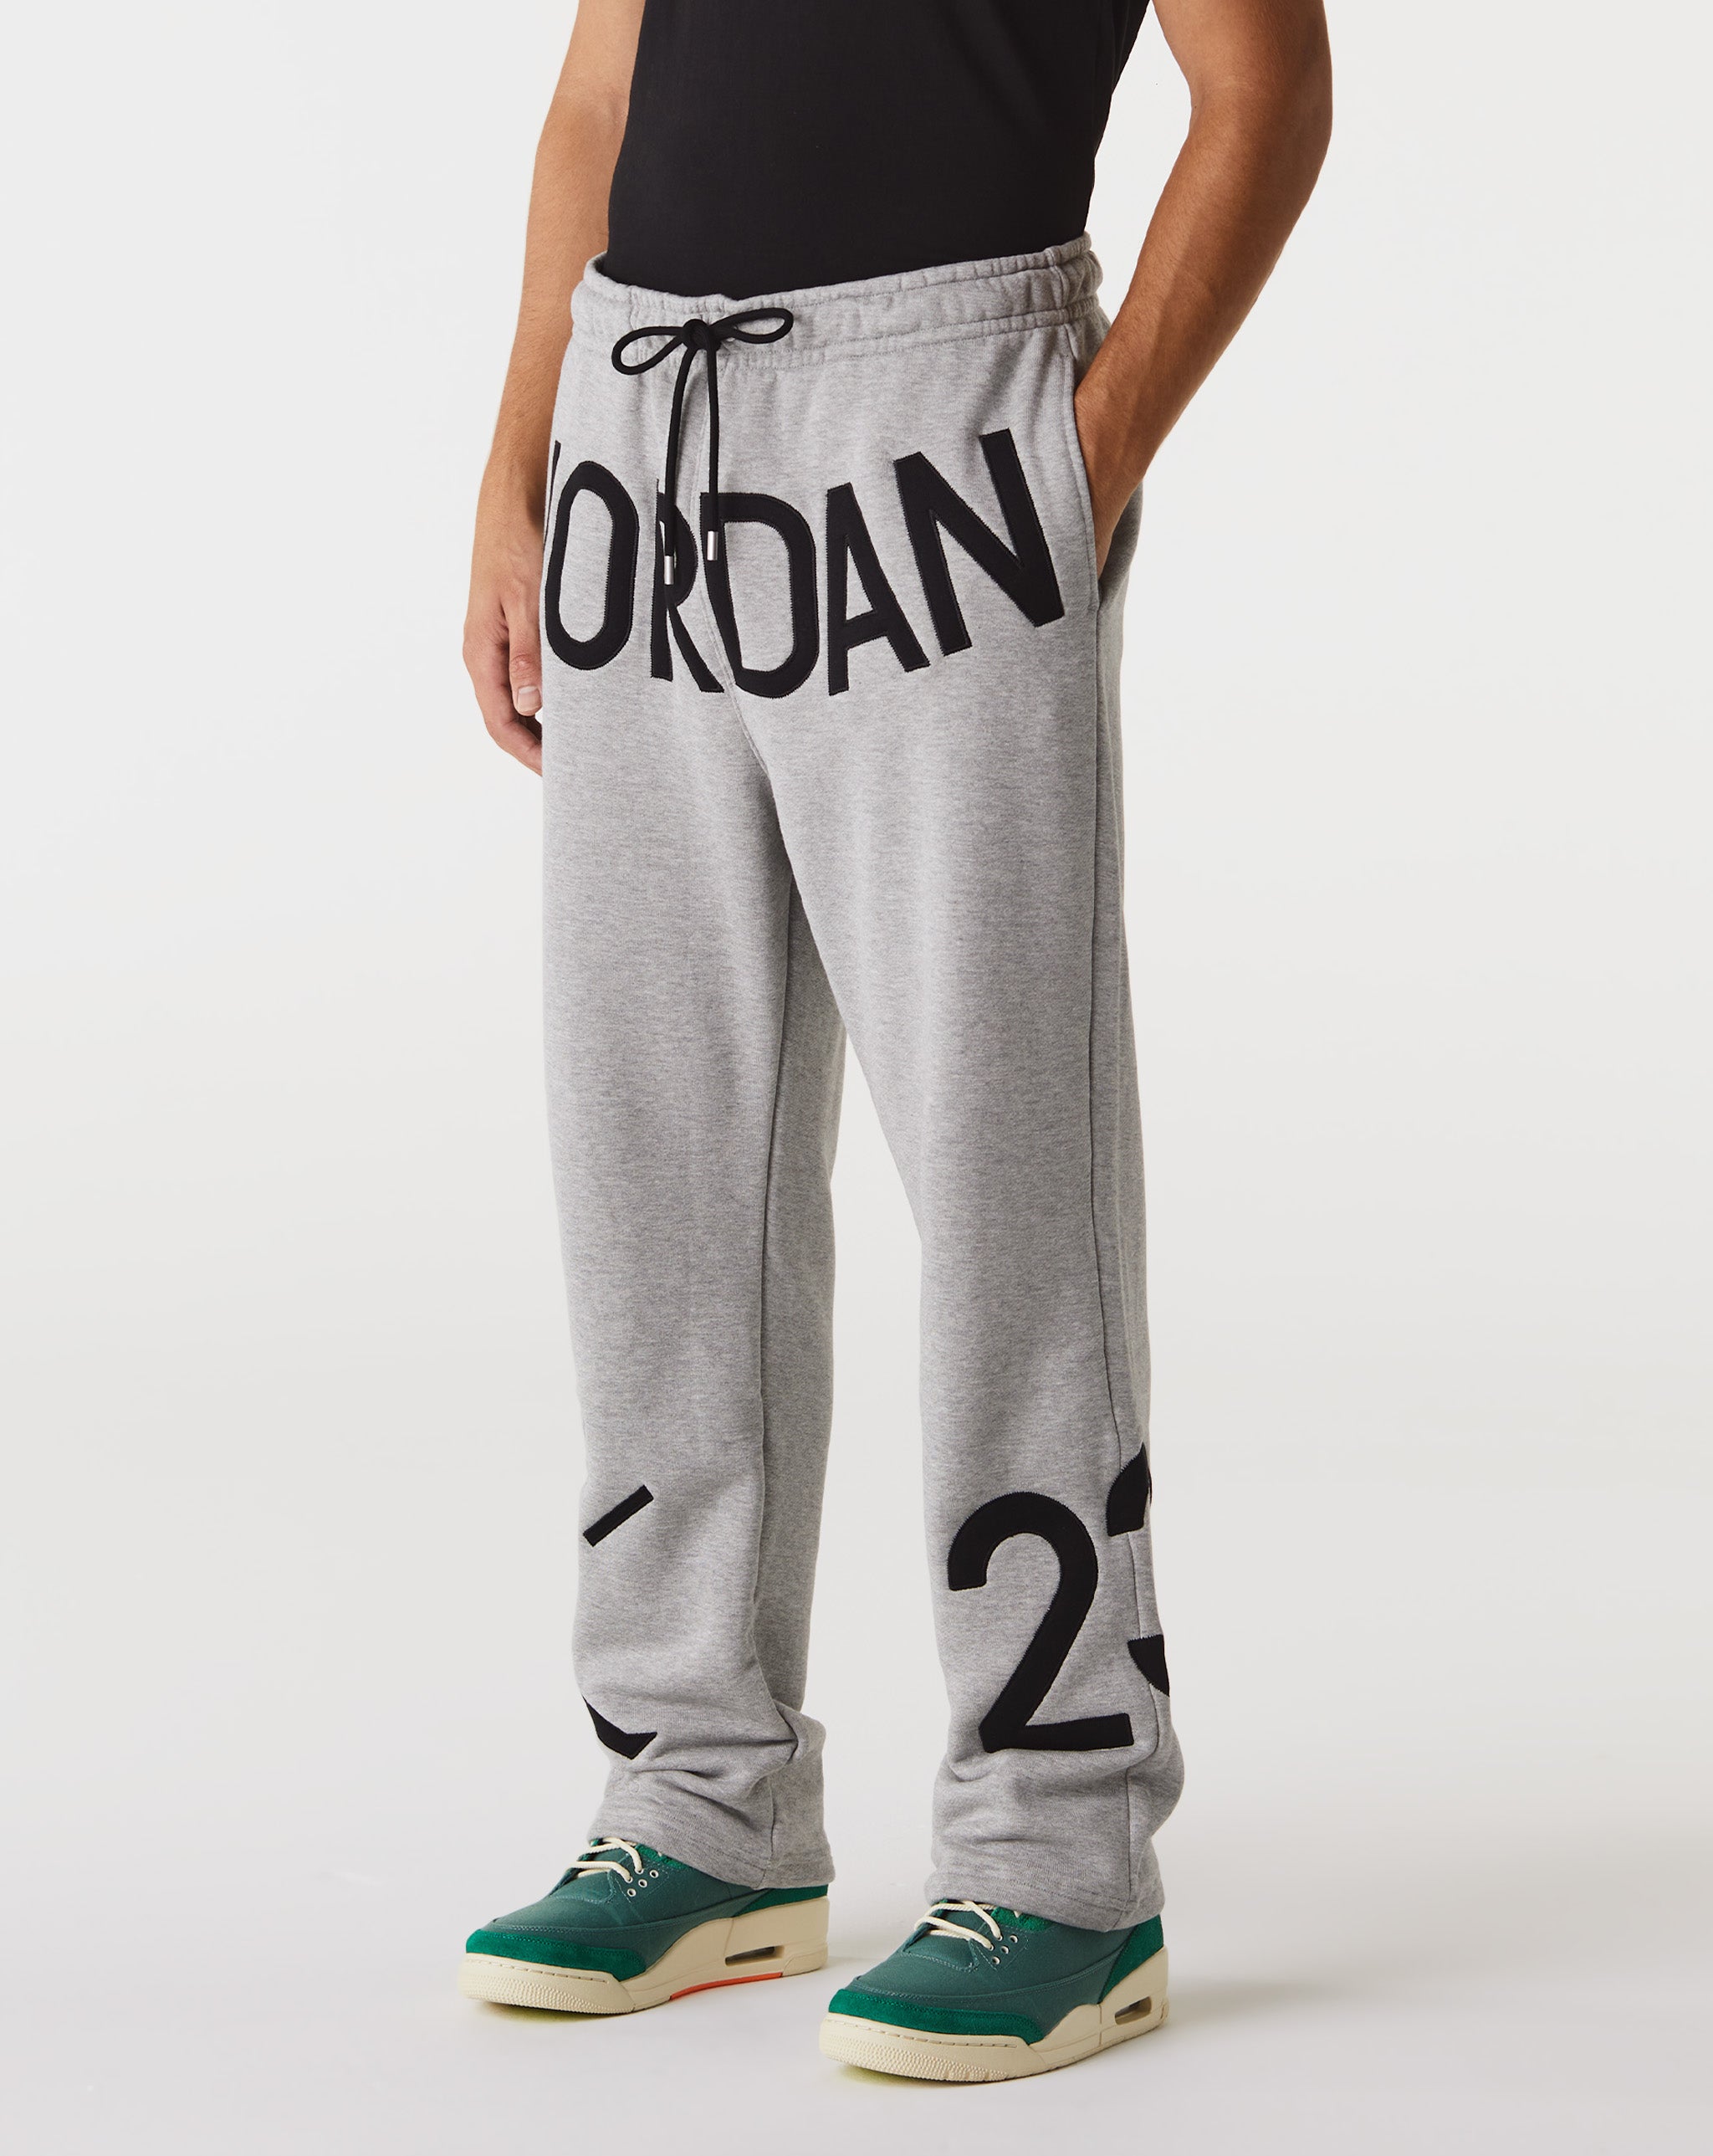 Air Jordan Nina Chanel Abney x Sweatpants  - Cheap Cerbe Jordan outlet